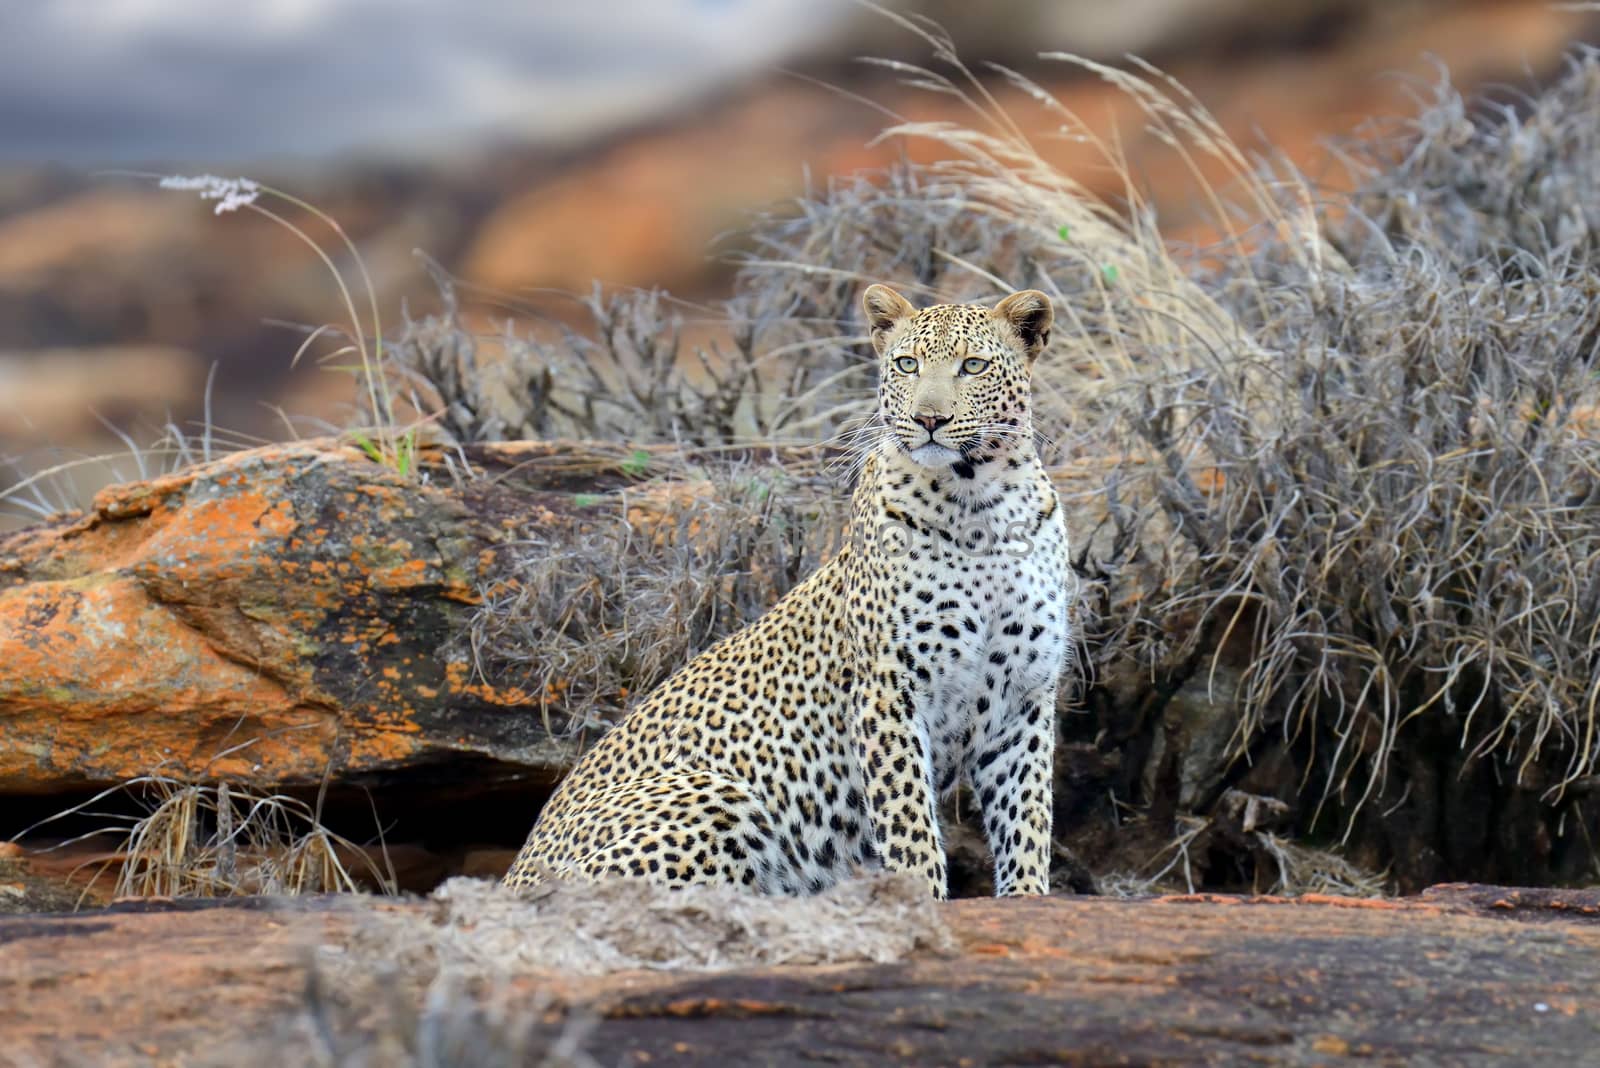 Leopard in National park of Kenya, Africa by byrdyak